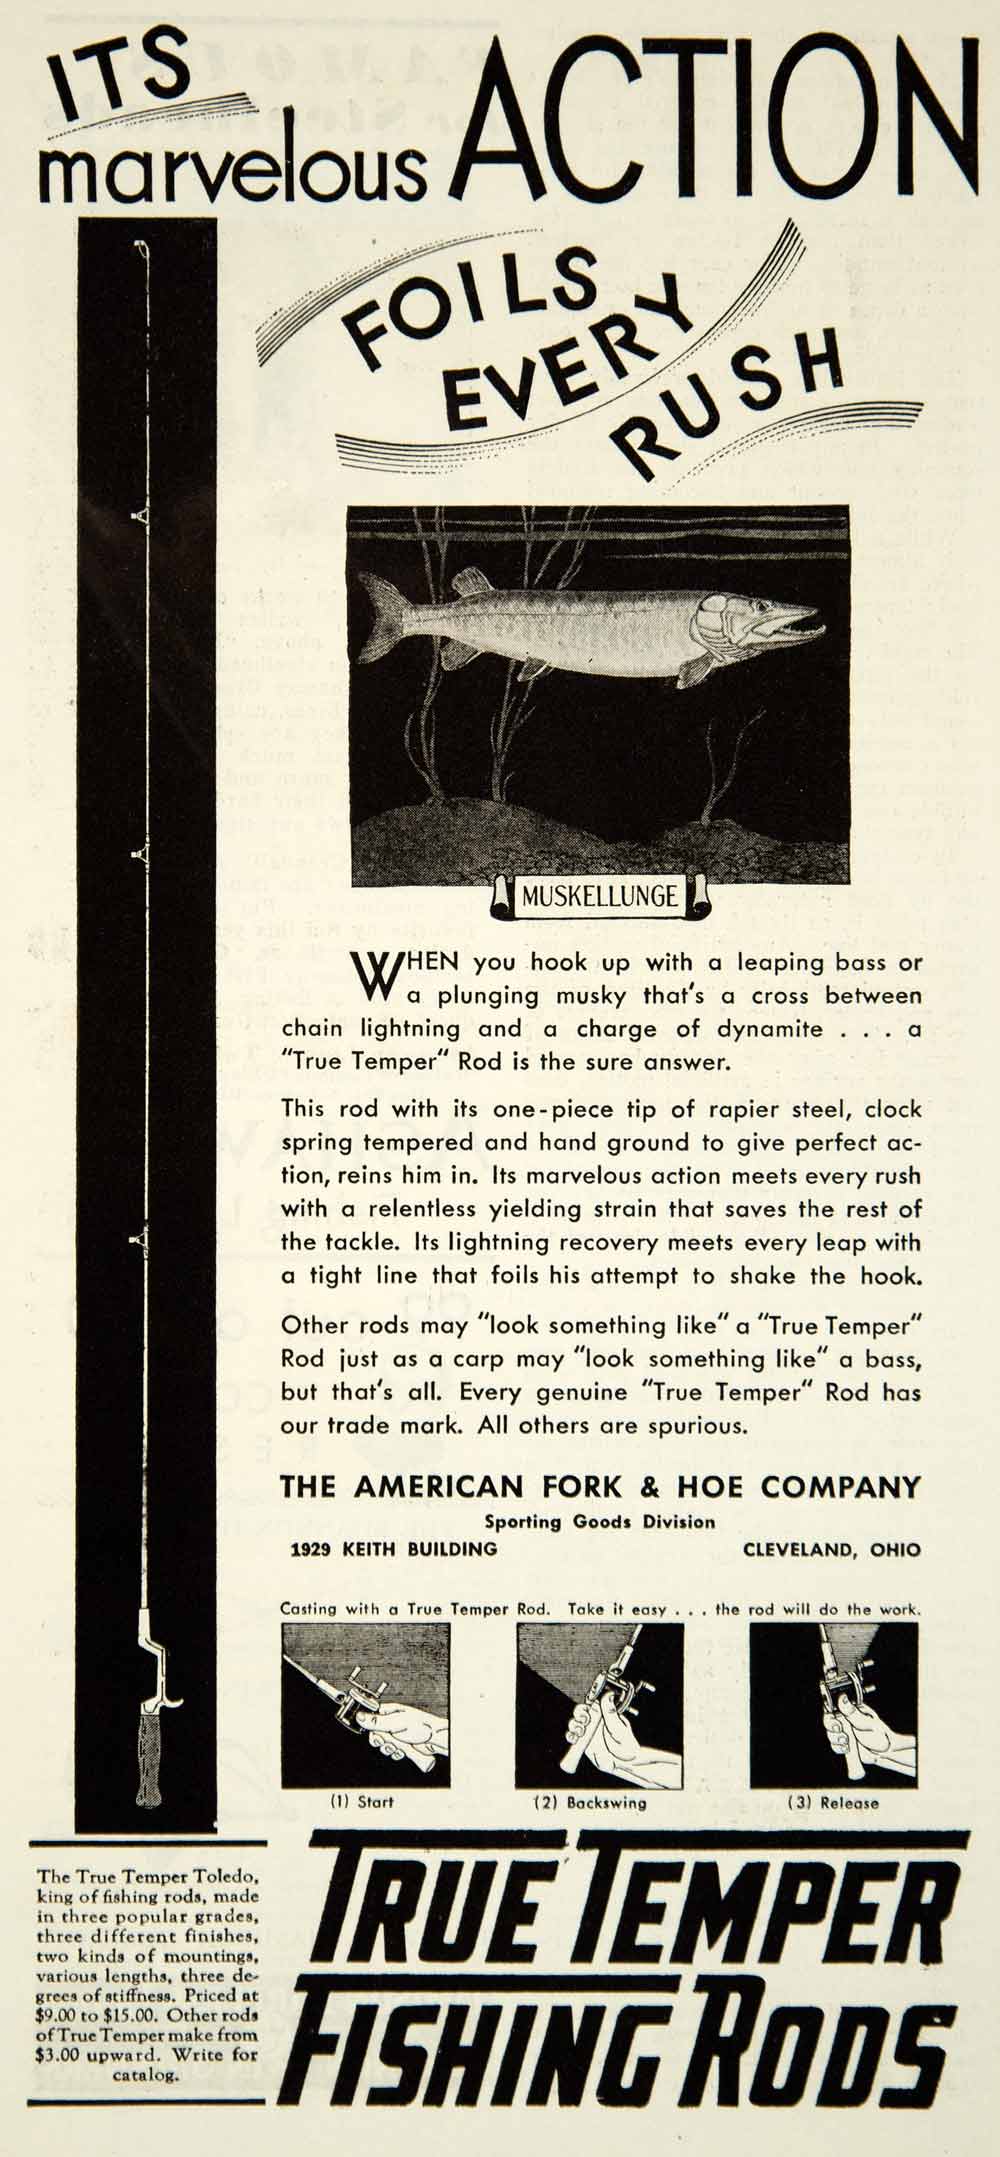 1931 Ad Pflueger Fishing Tackle Supreme Reel Tandem Spinner Lure